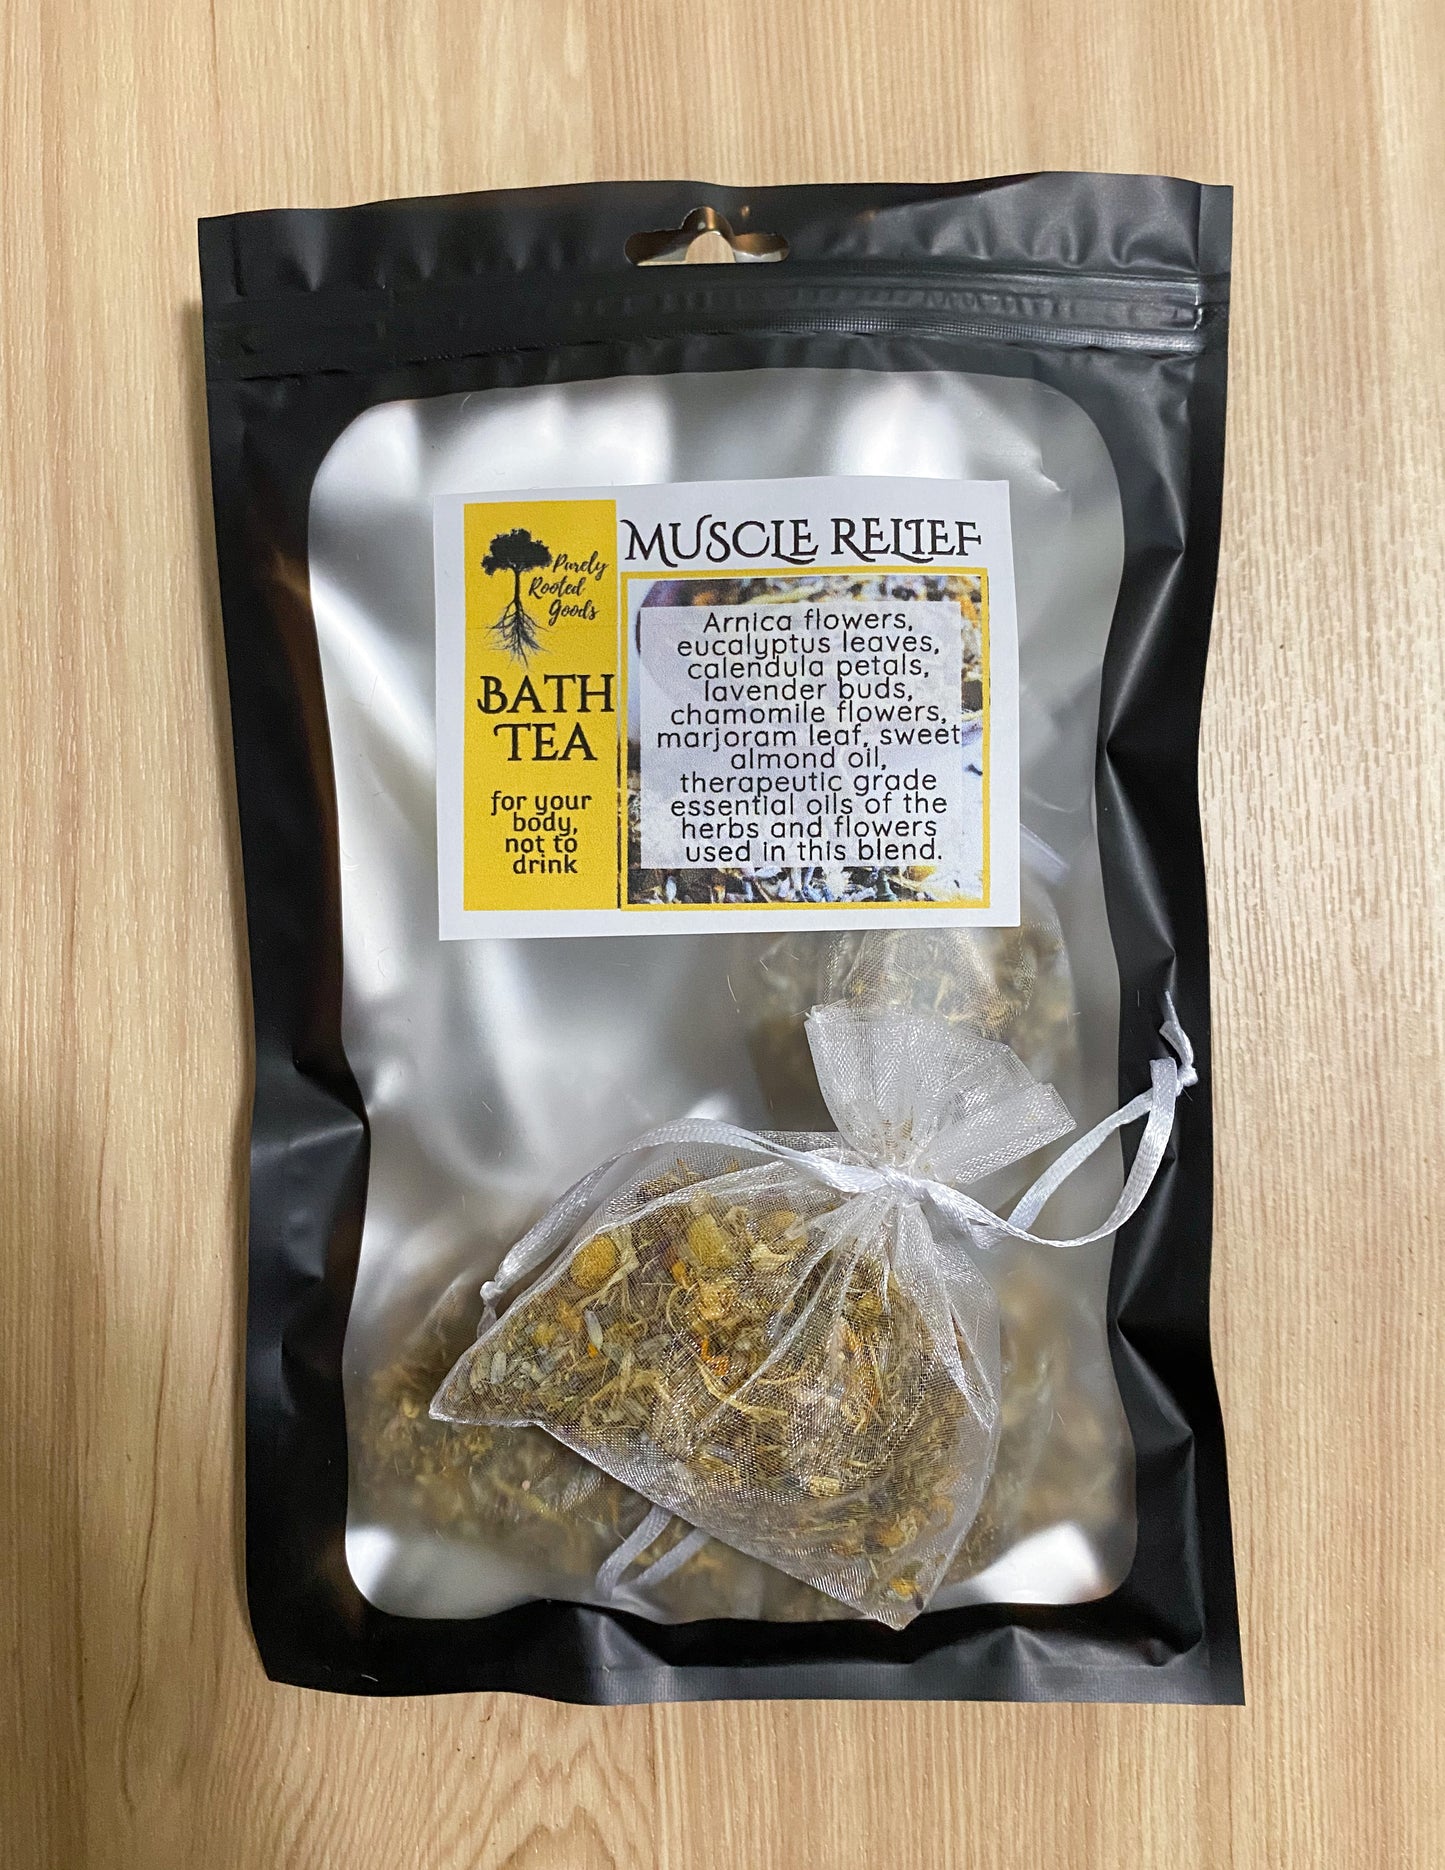 Muscle Relief Bath Tea